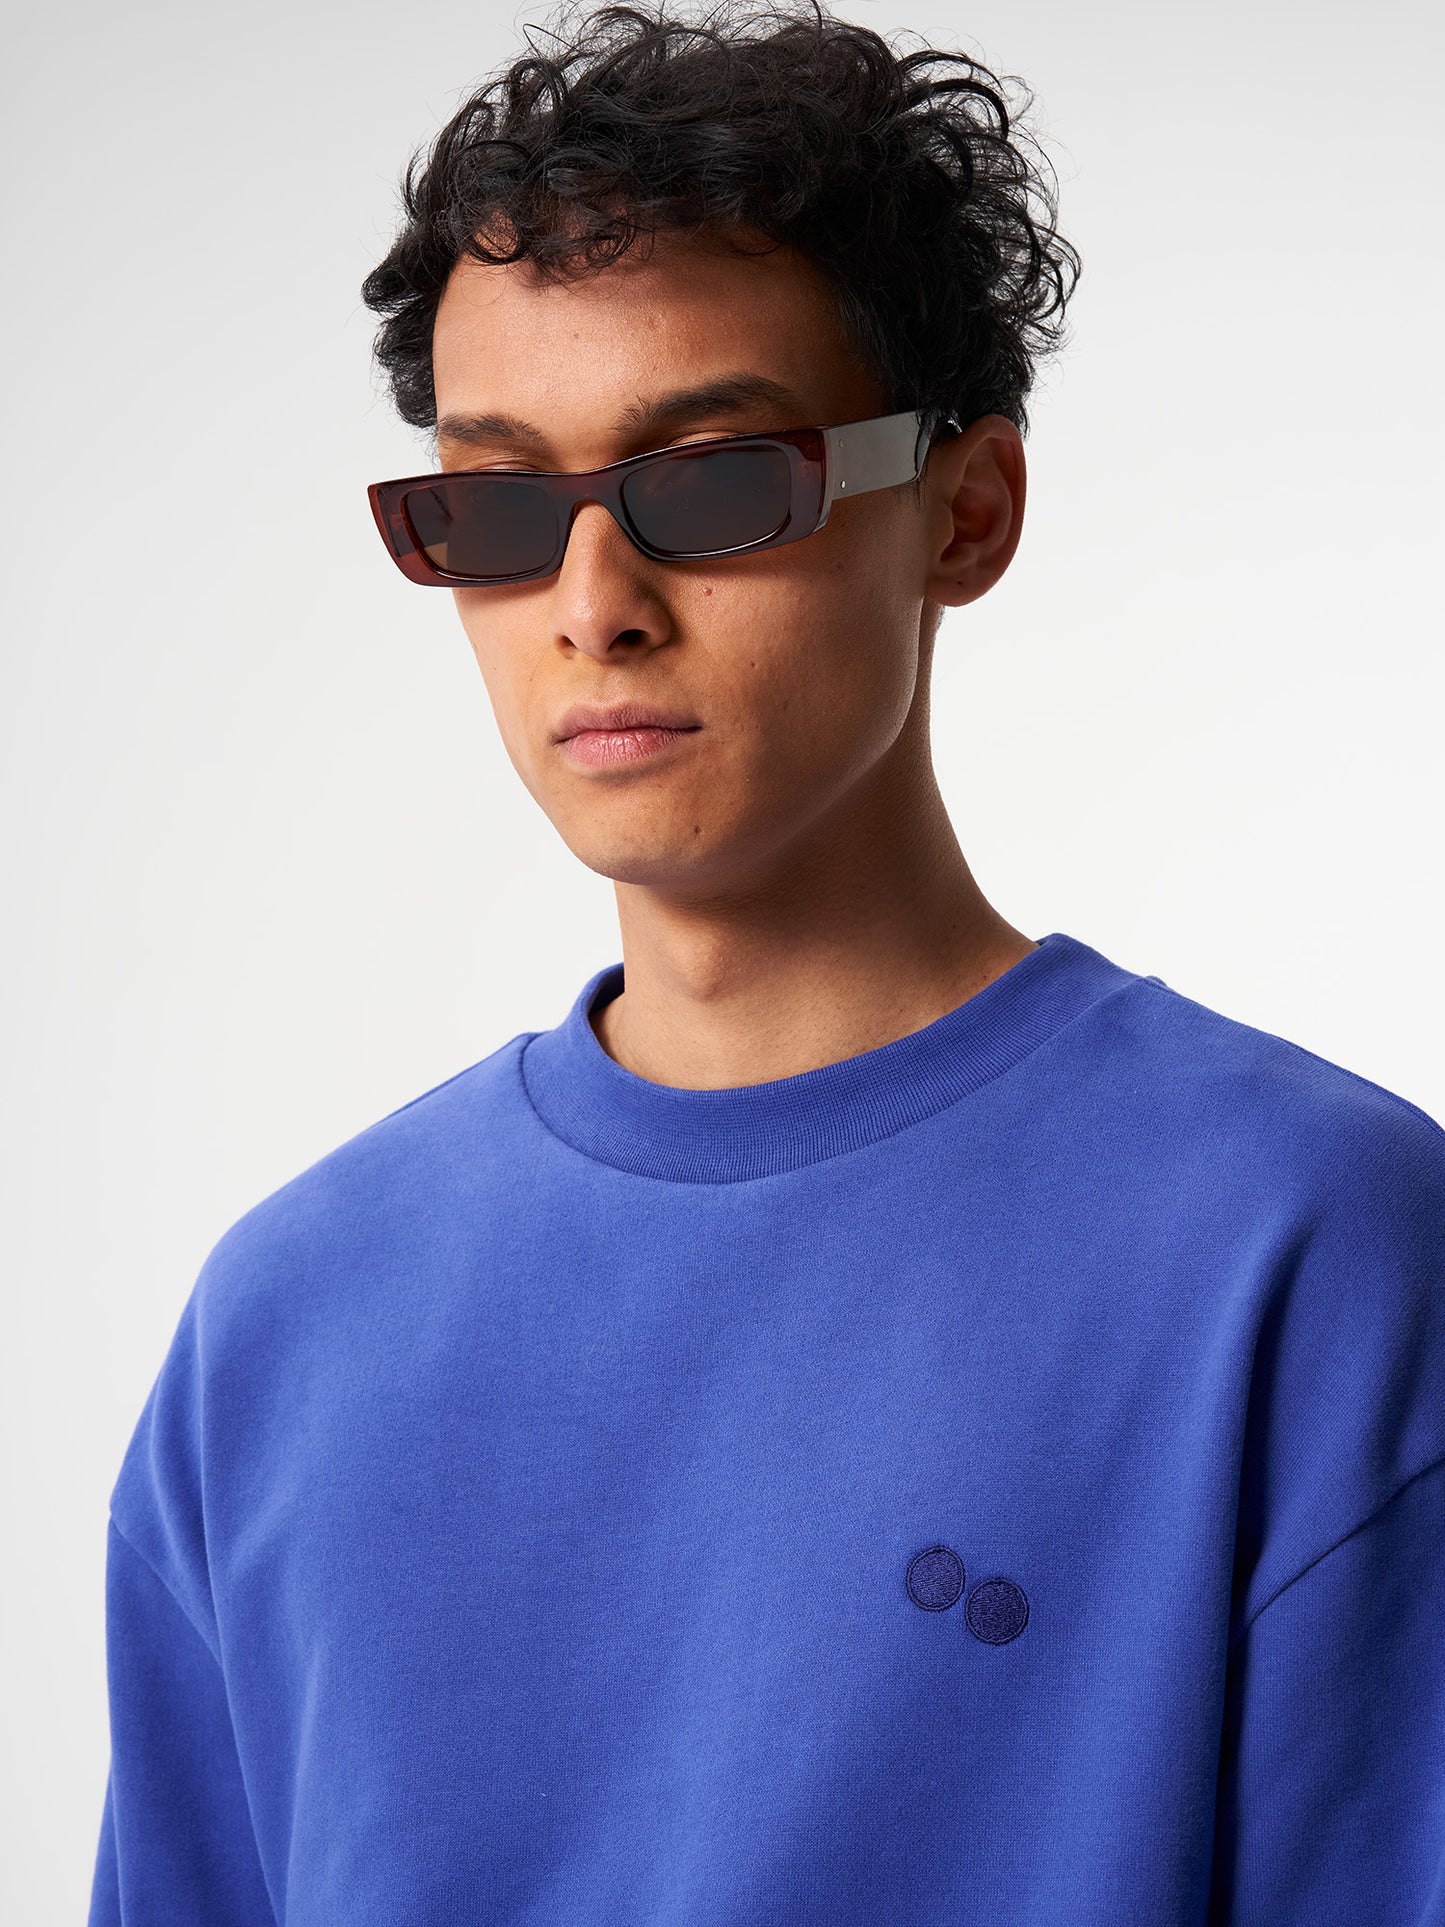 pinqponq-Sweatshirt-Unisex-Poppy-Blue-model-closeup-front